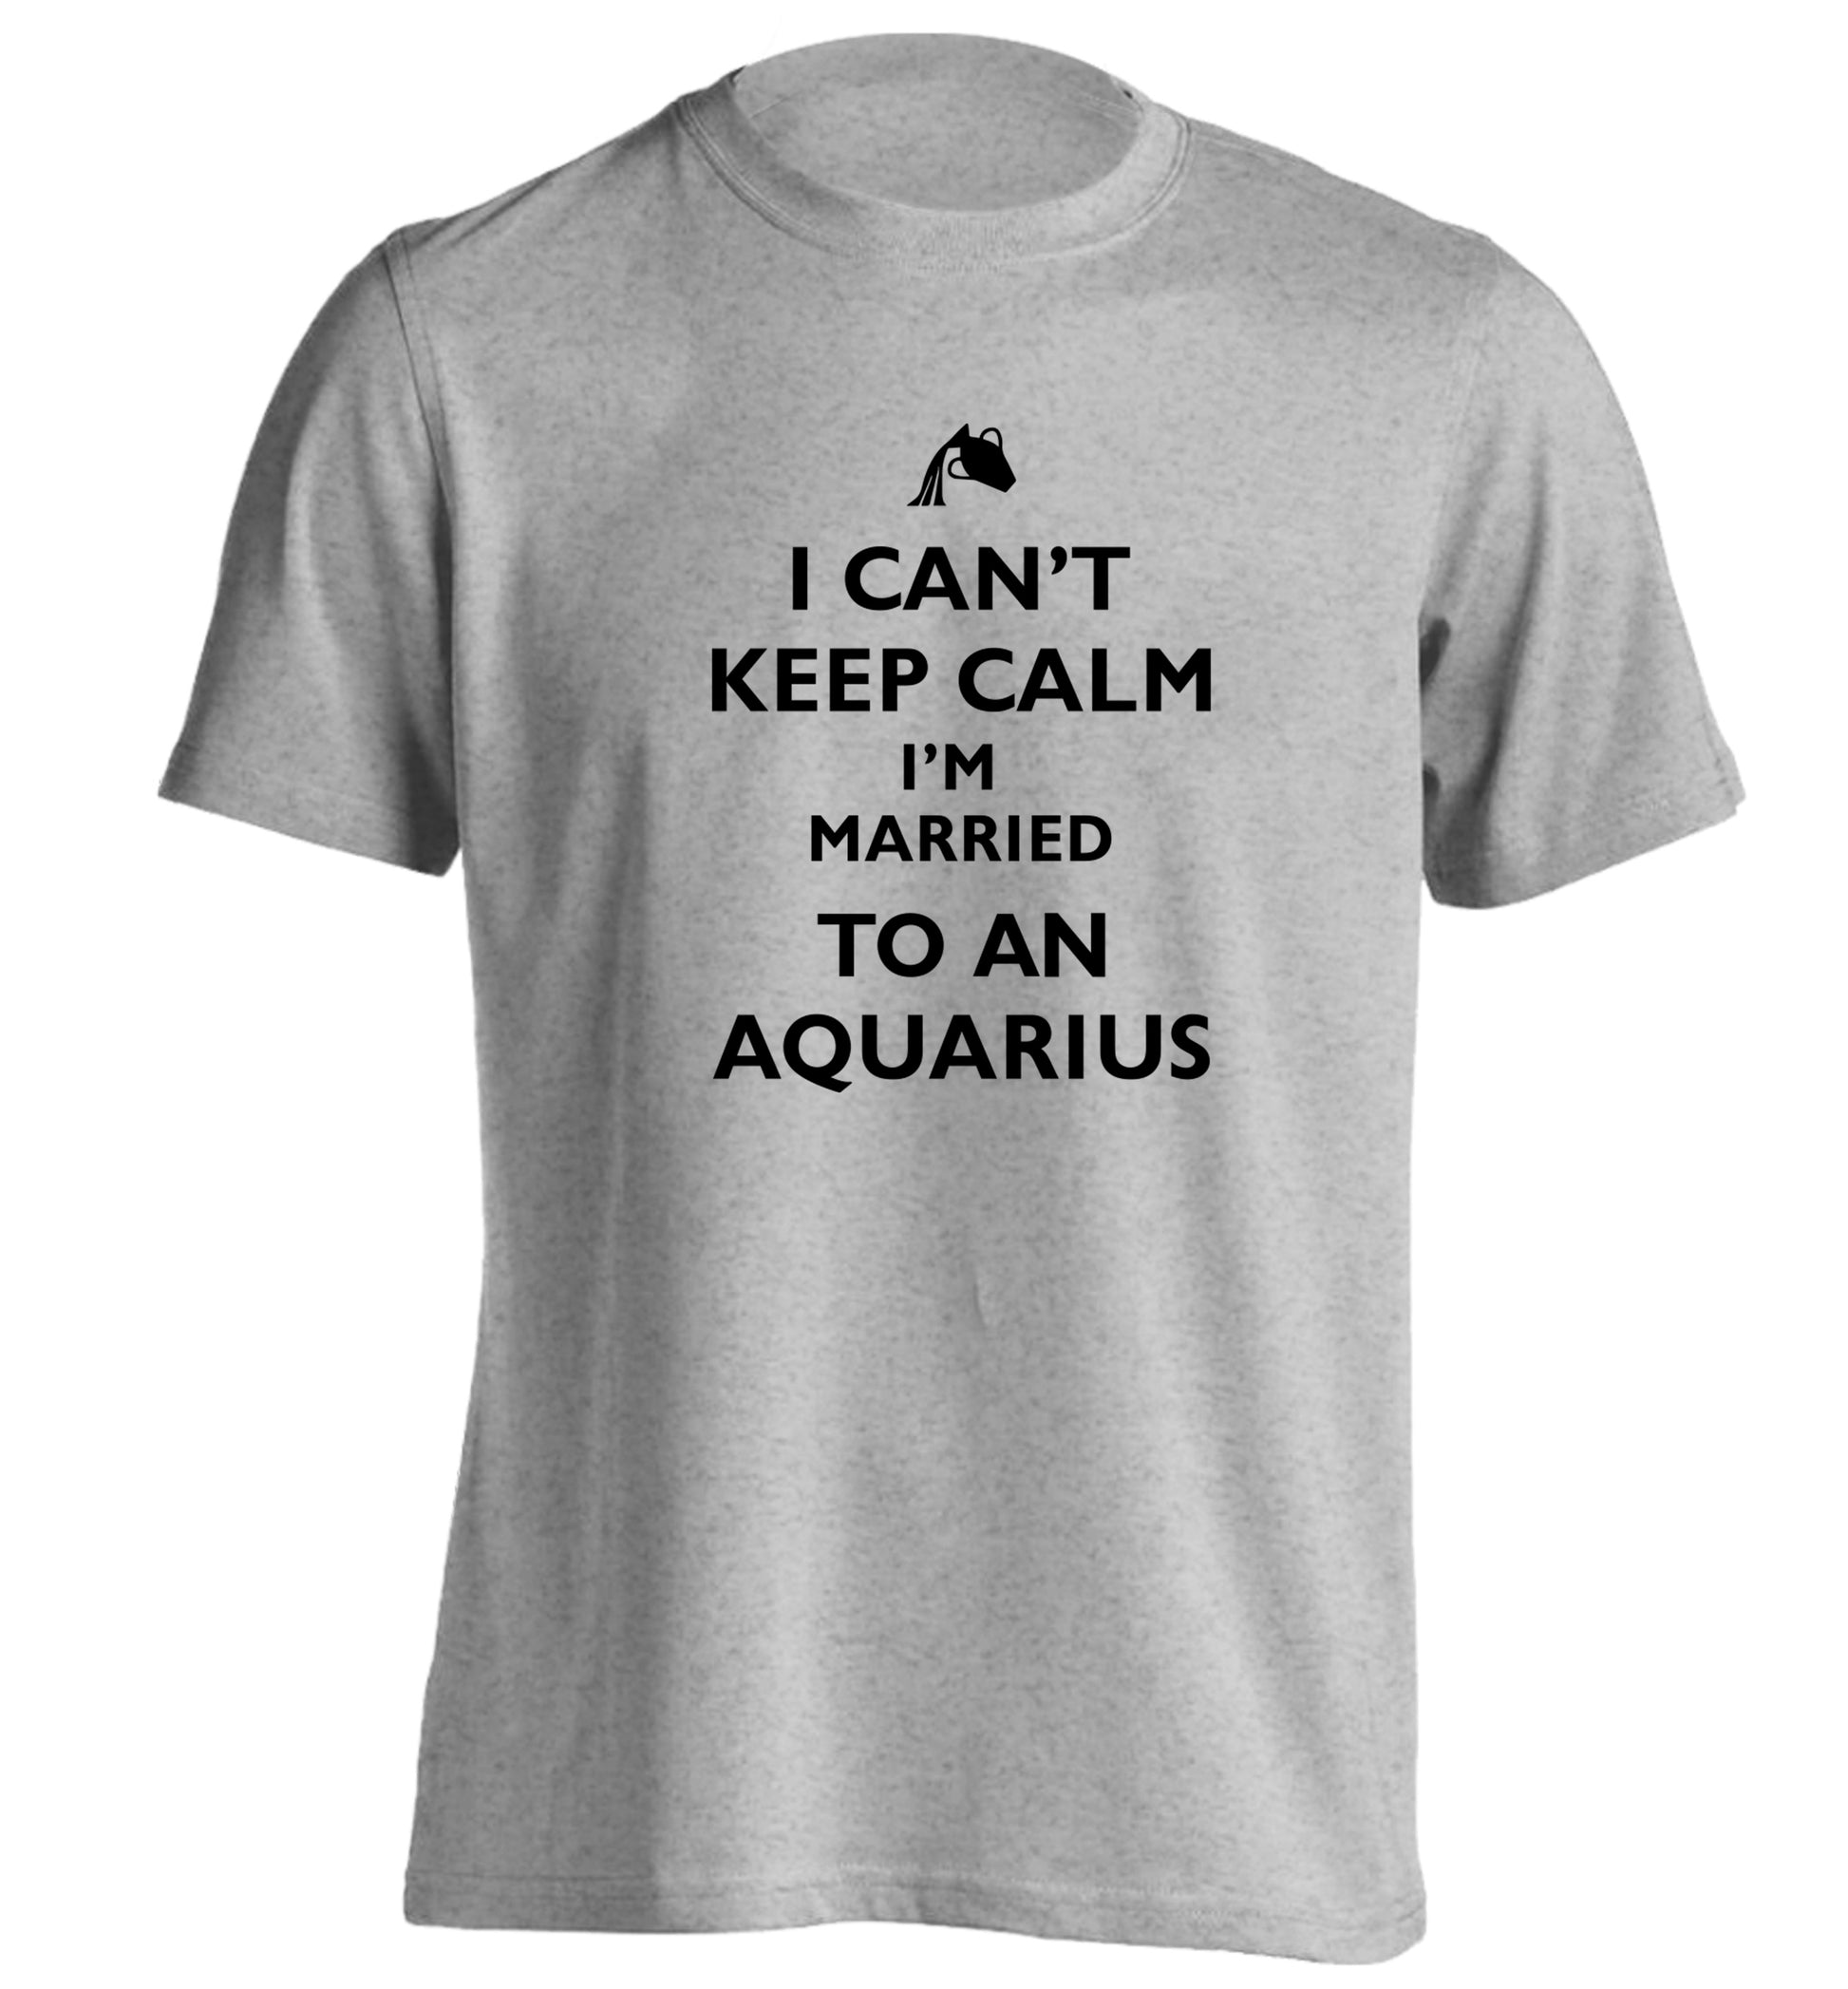 I can't keep calm I'm married to an aquarius adults unisex grey Tshirt 2XL